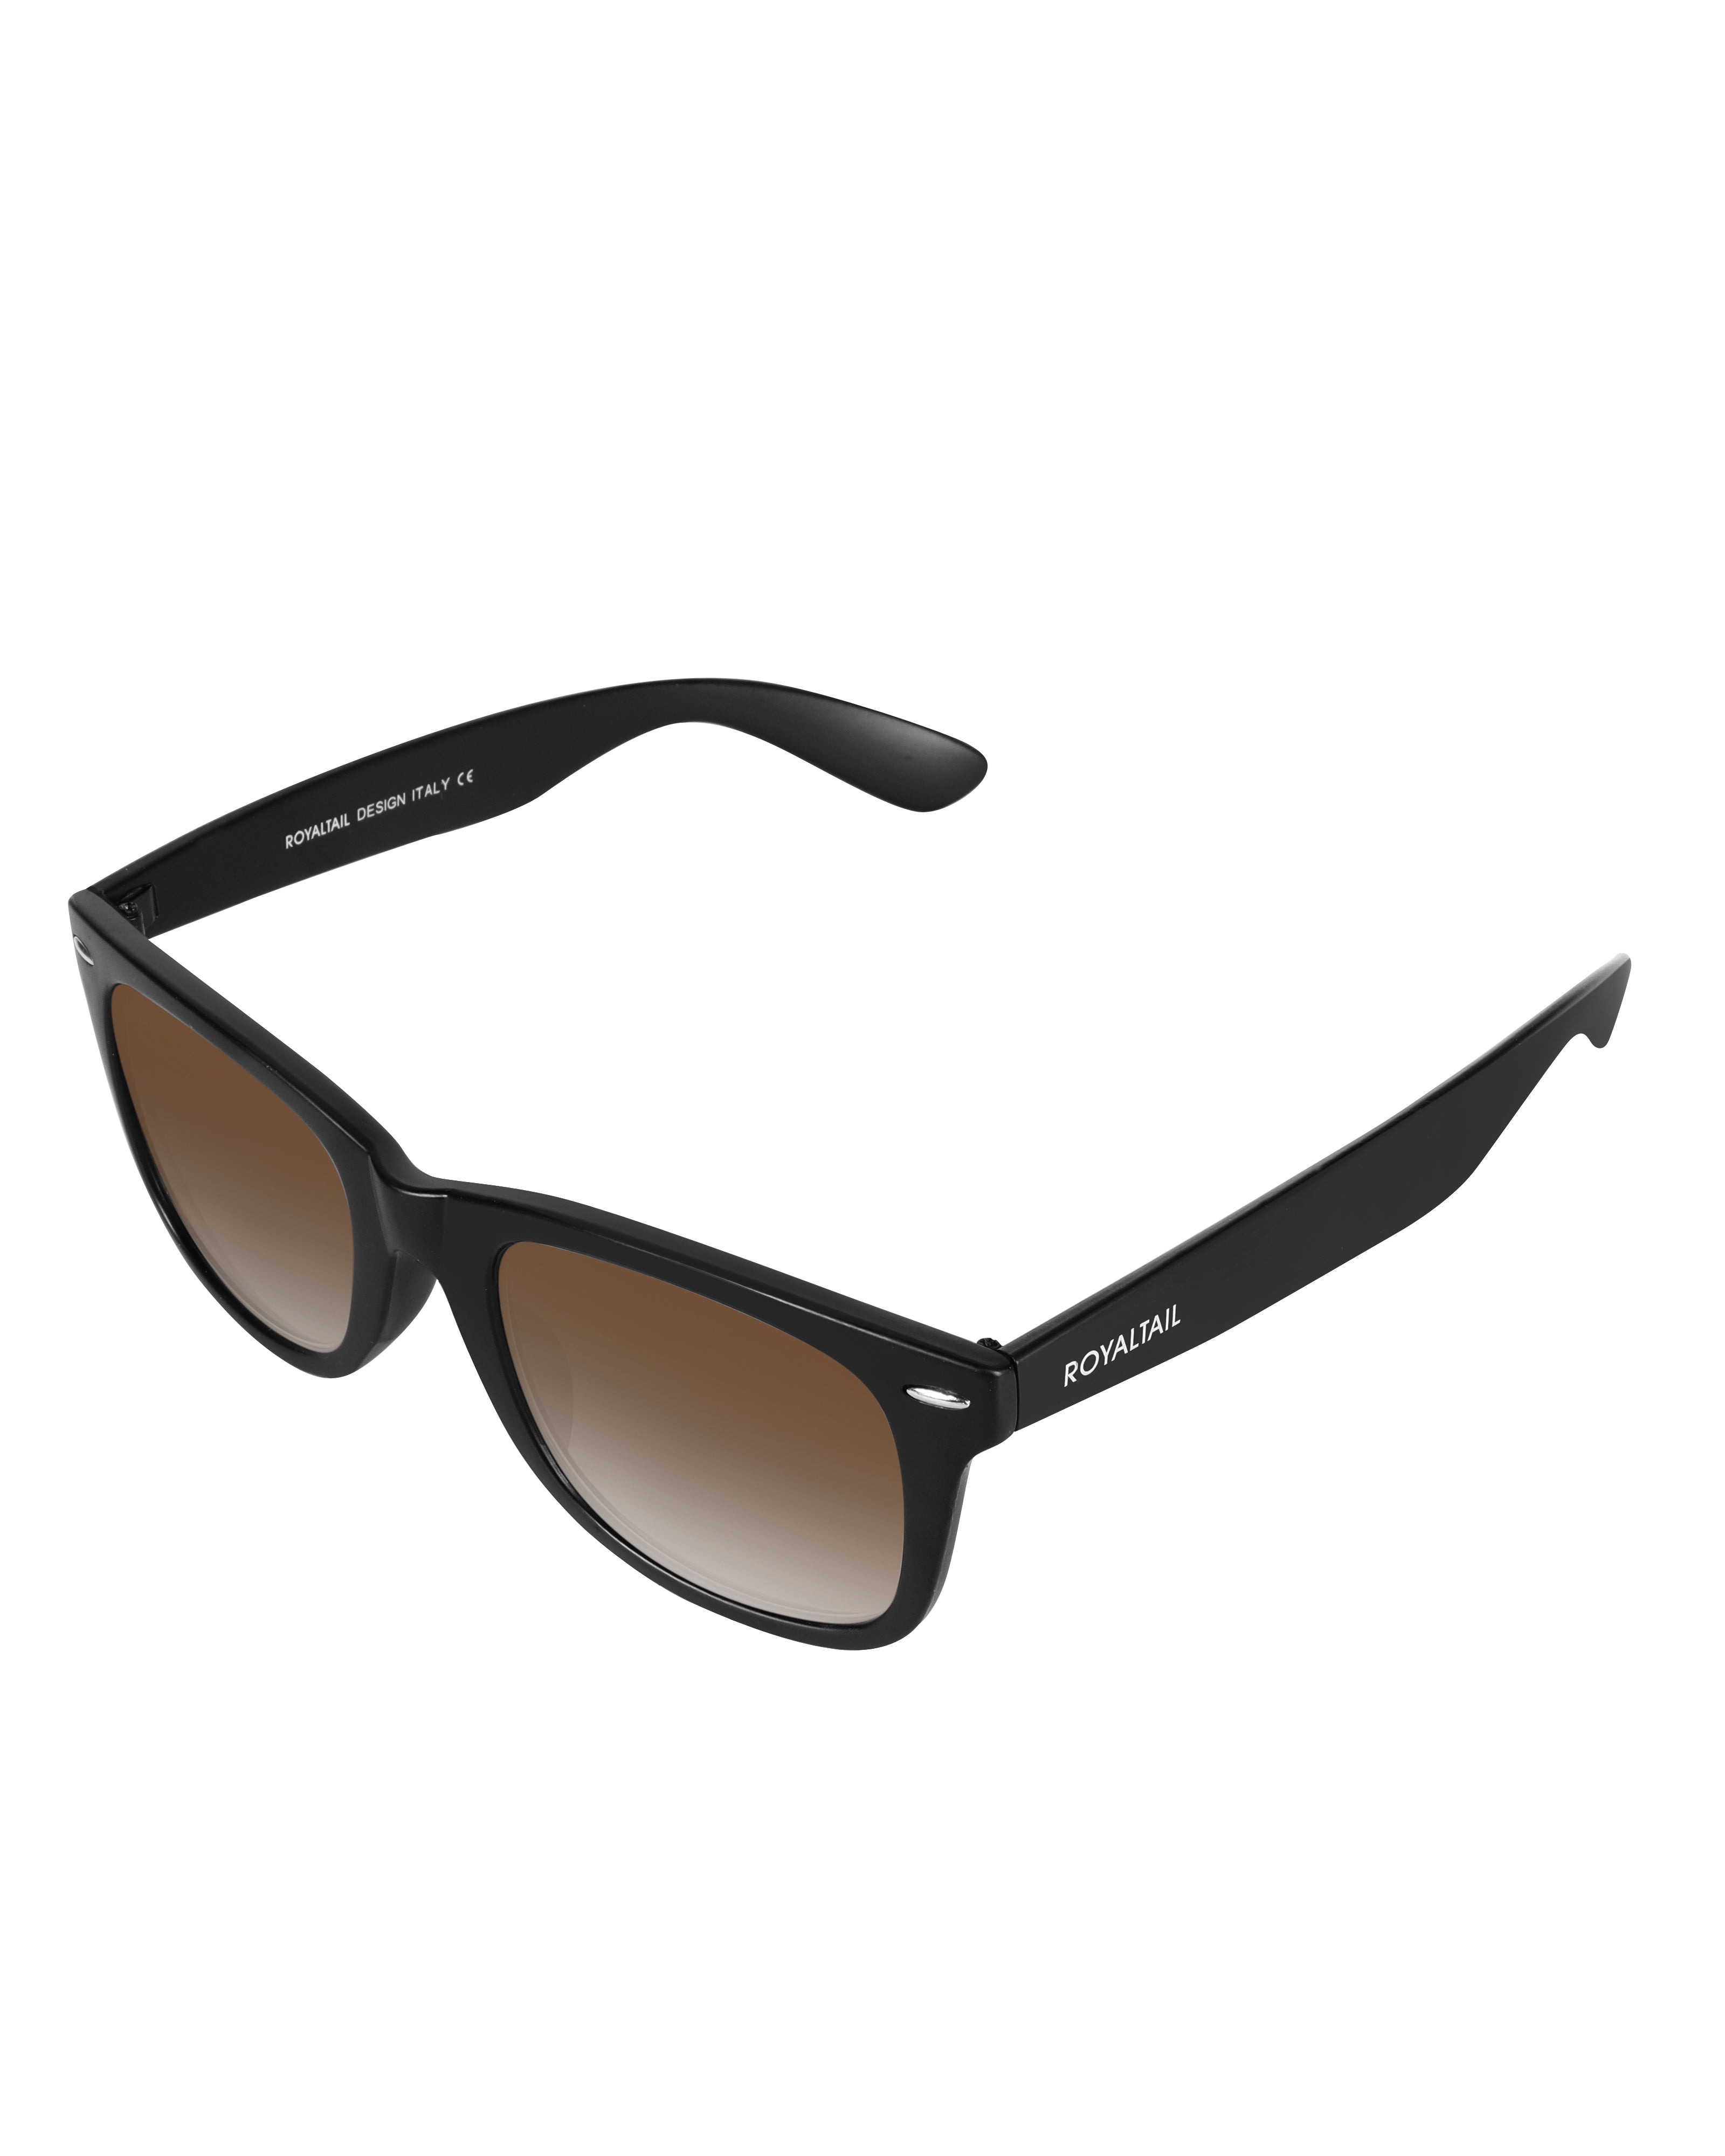 Zulu & Zephyr x Local Supply - Oval Sunglasses - Black